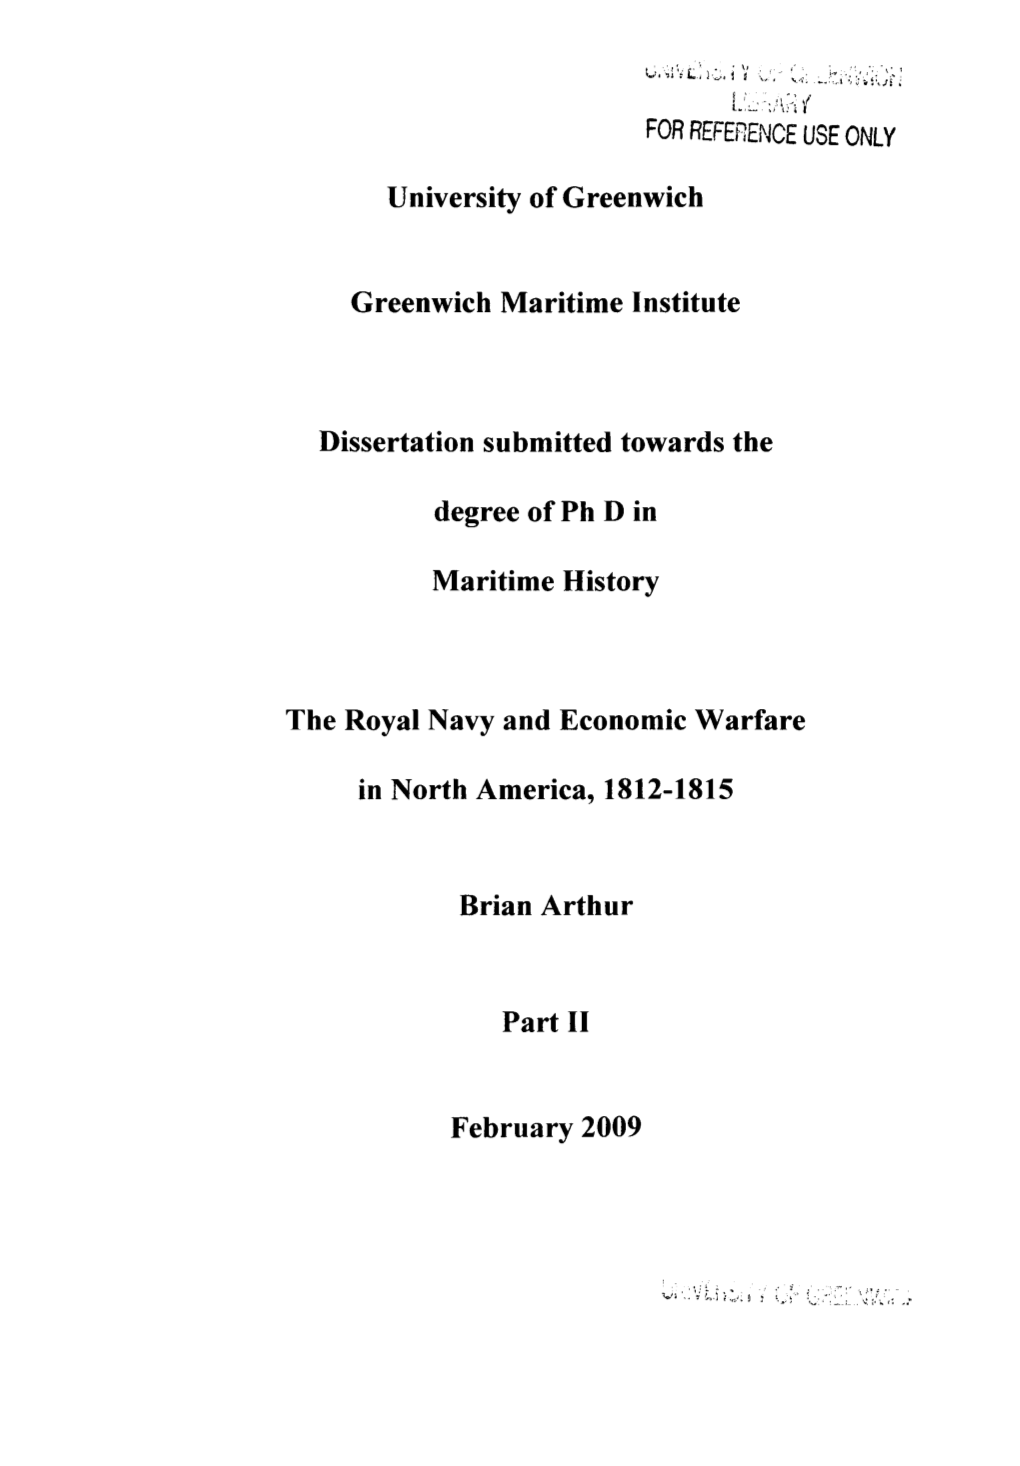 The Royal Navy and Economic Warfare